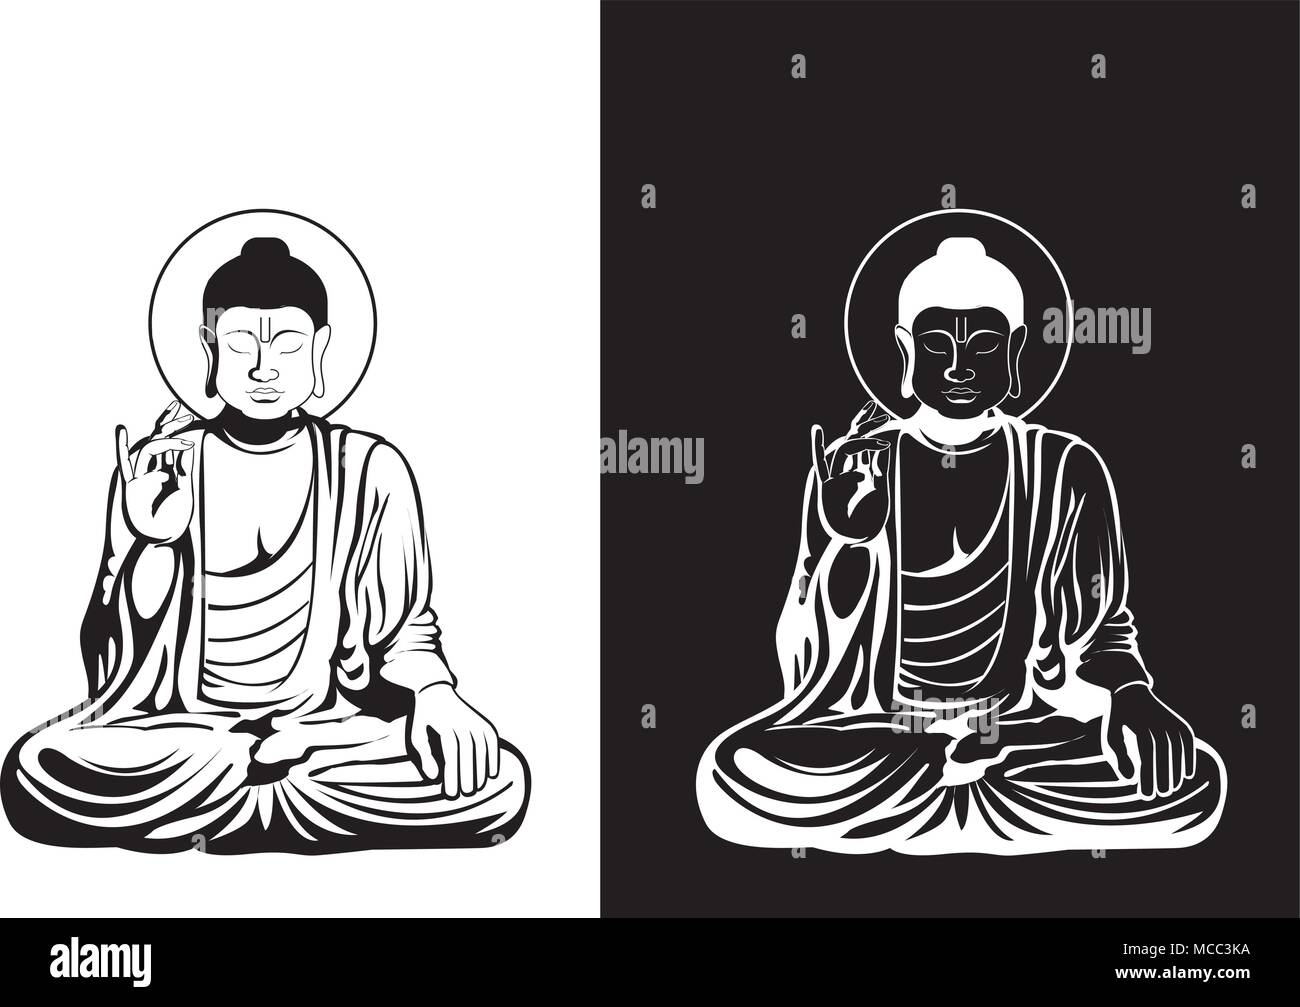 Share 160+ gautam buddha drawing easy super hot